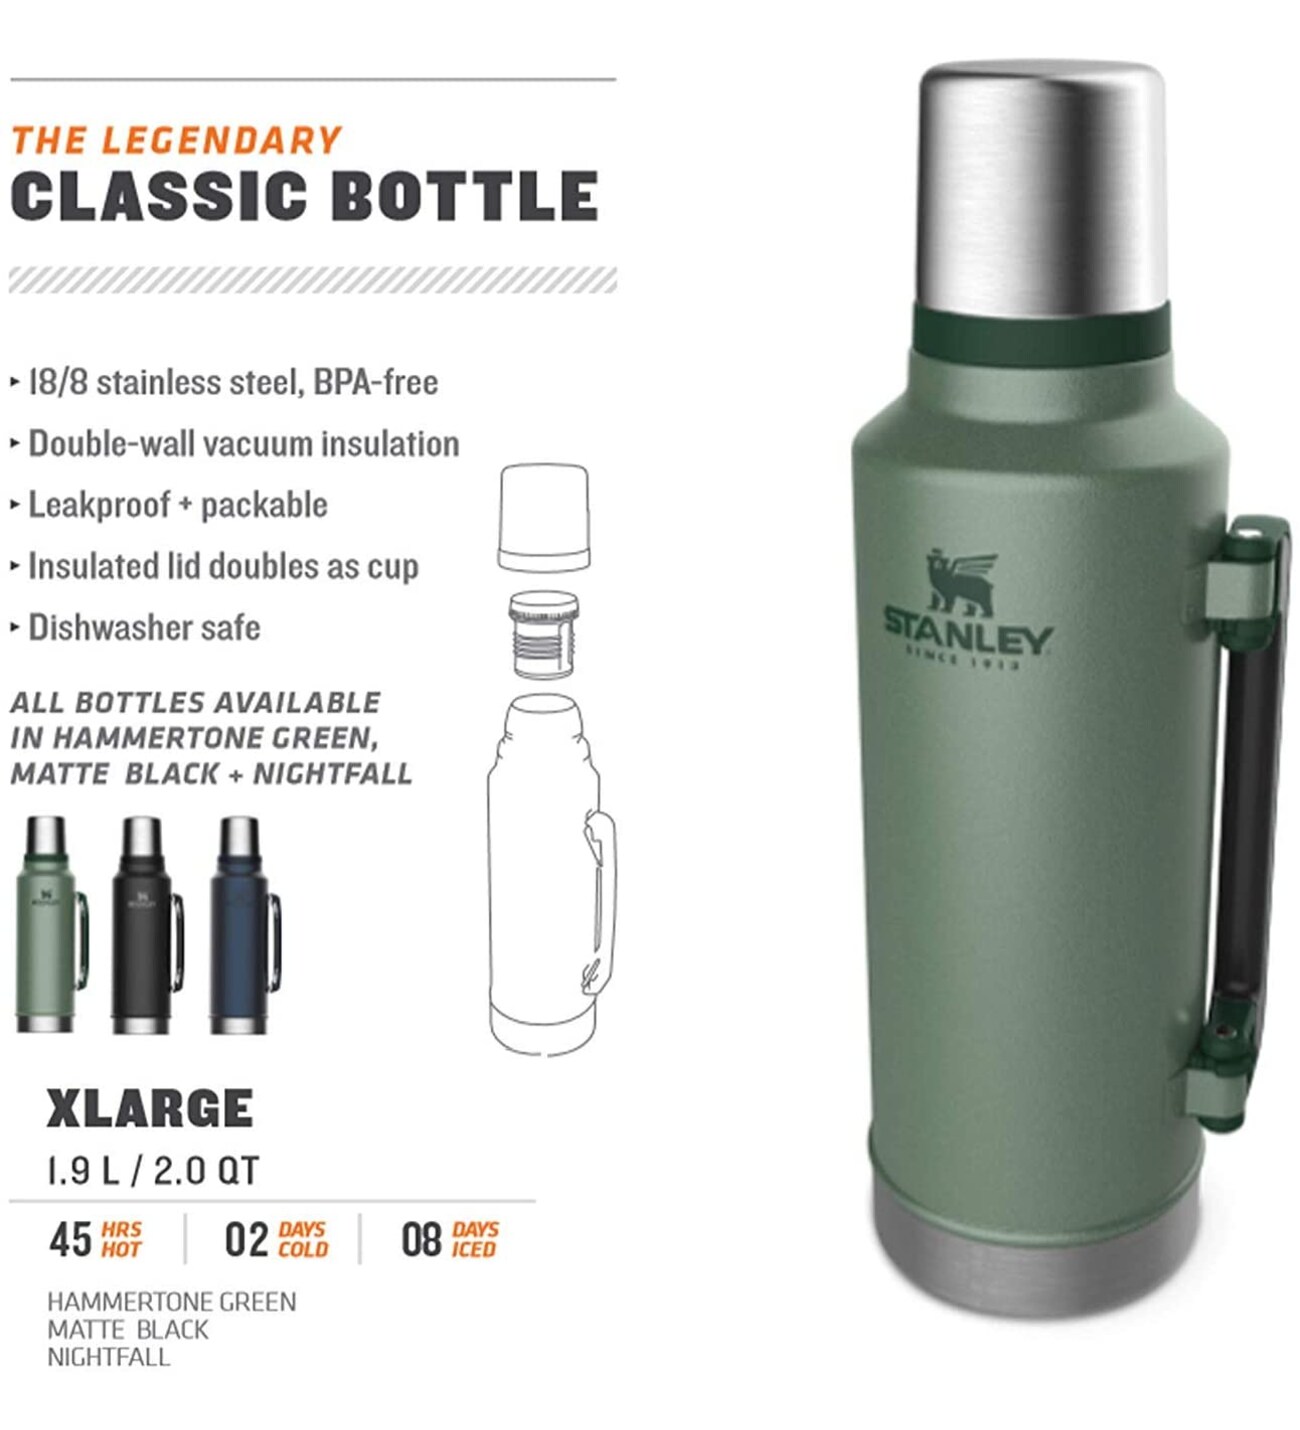 فلاسک استنلی Classic Legendary Bottle 1.9L